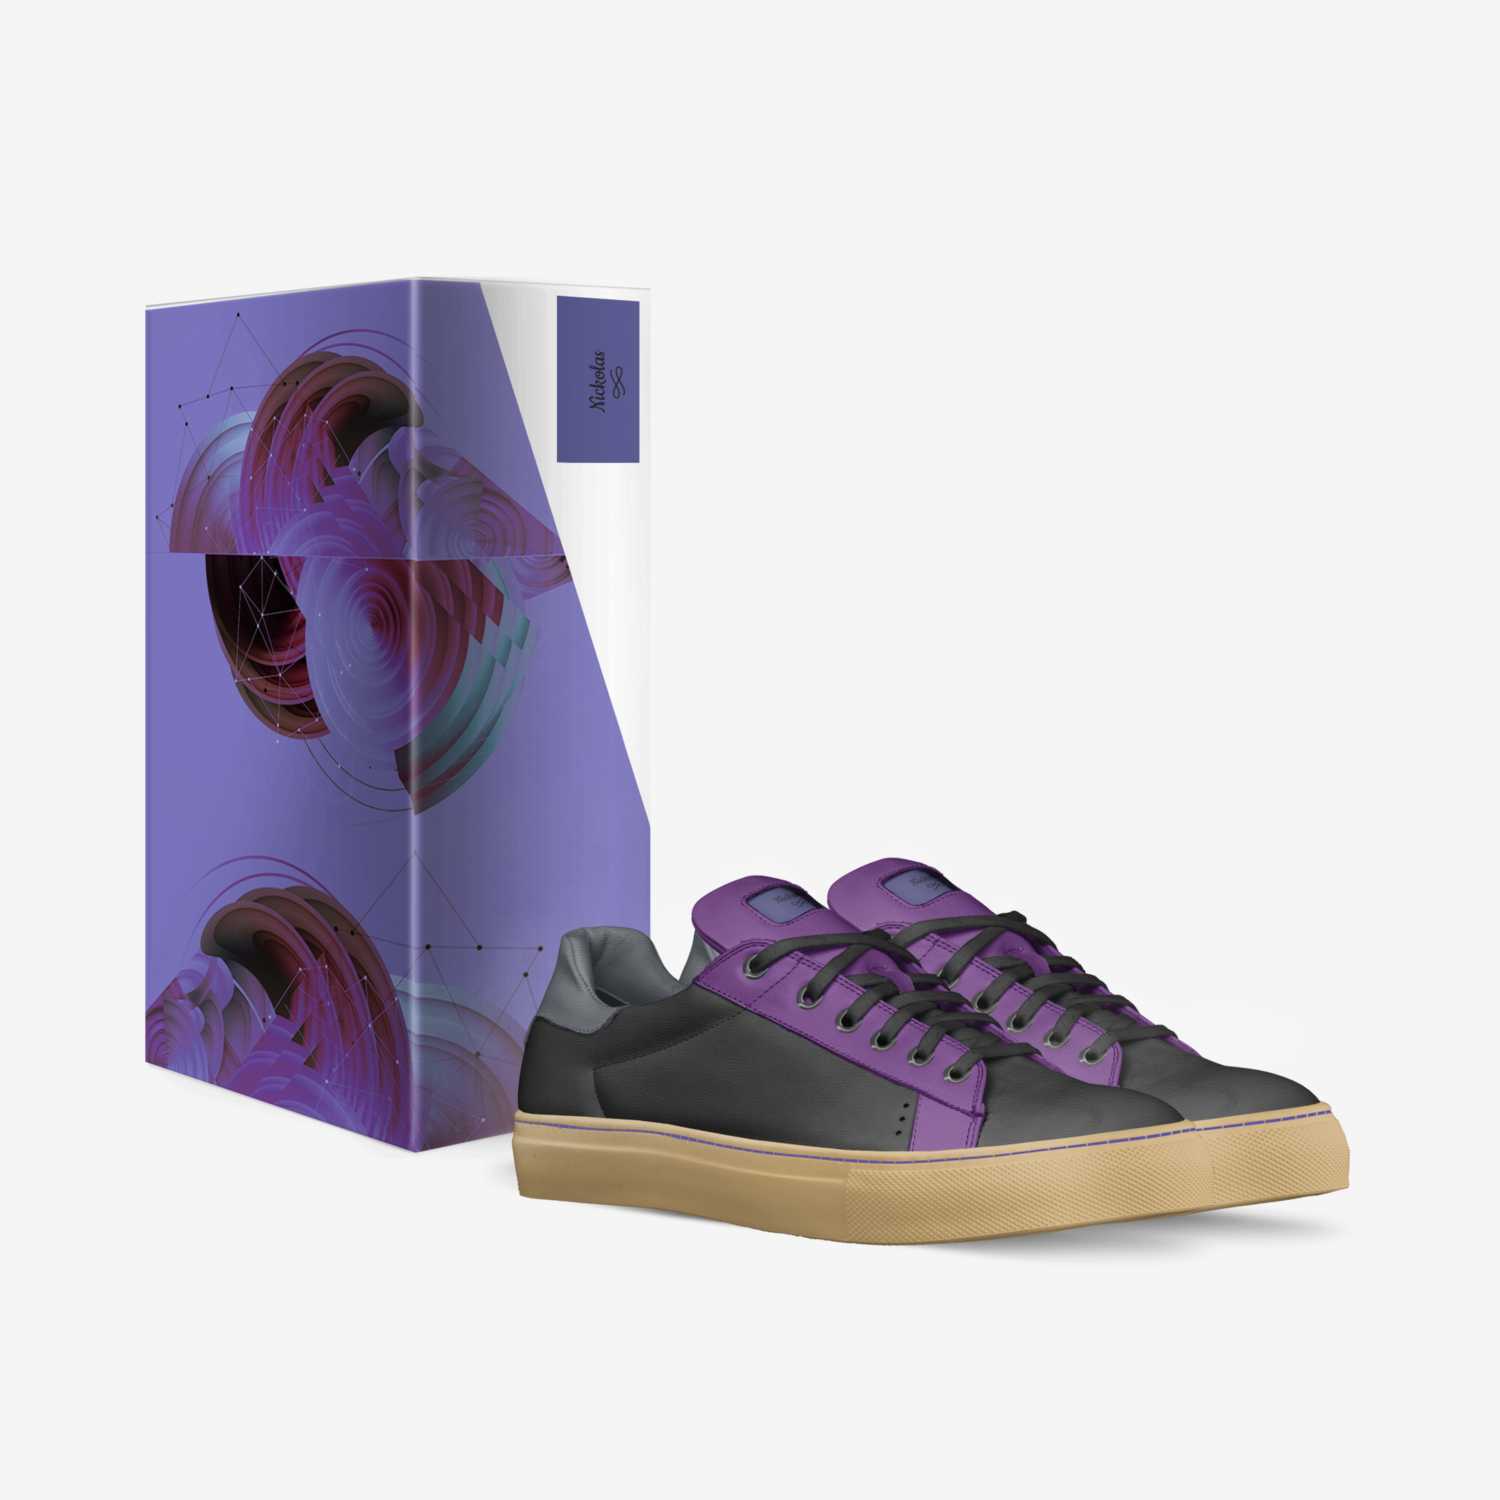 Nick Kremidas custom made in Italy shoes by Nicholas Kremidas | Box view